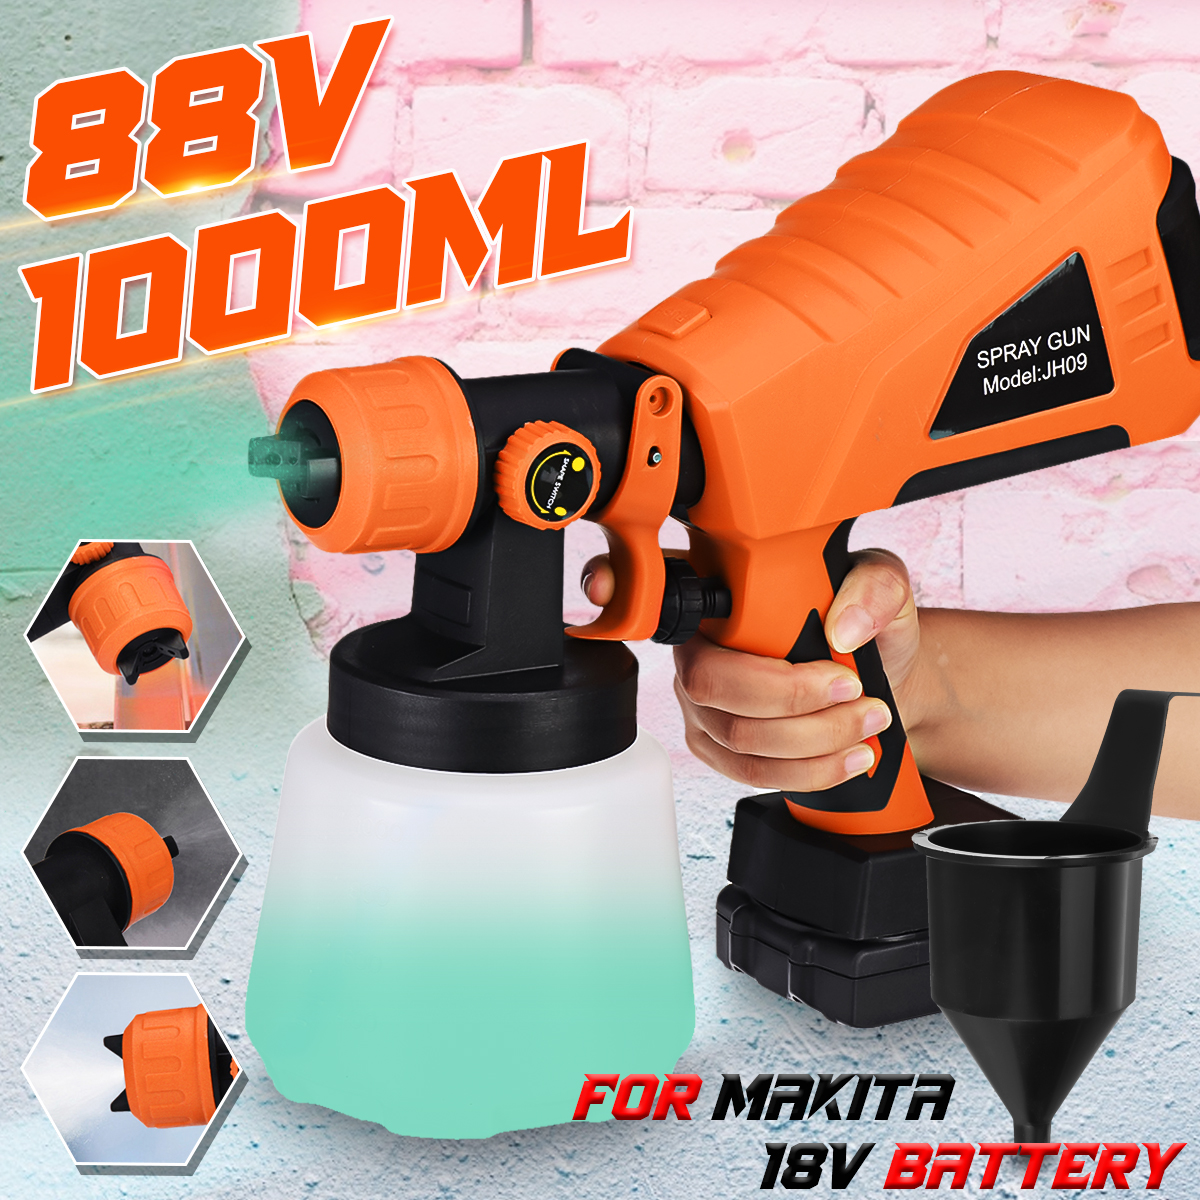 88VF-1000ML-Electric-Spray-Guns-Household-Convenience-Spray-Paint-With-Li-ion-Battery-Regulation-Hig-1891972-1